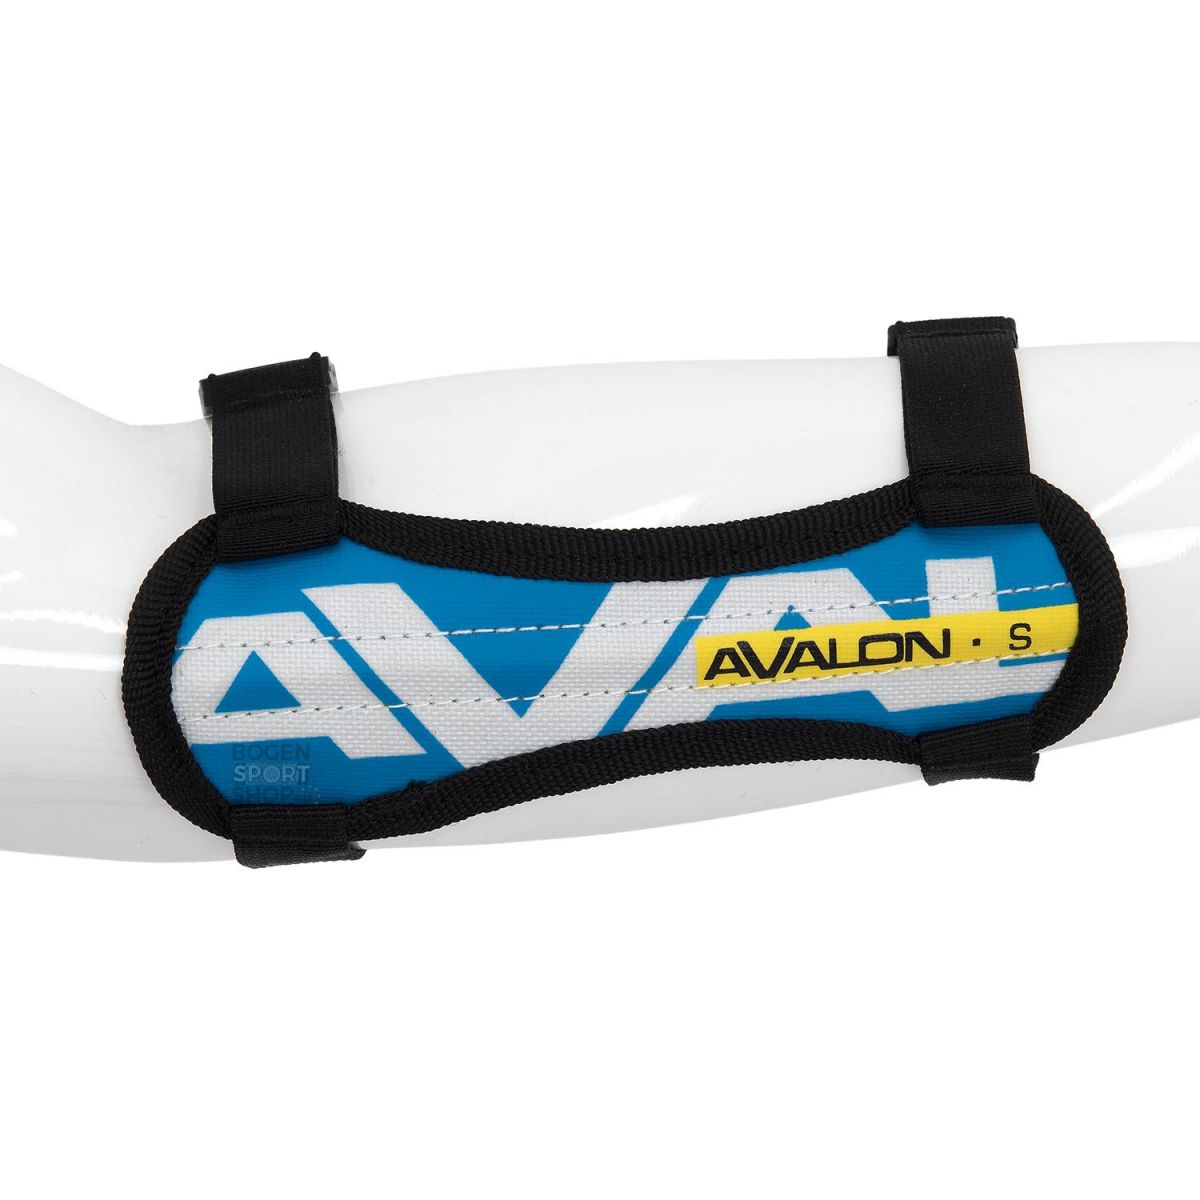 Avalon Armguard S